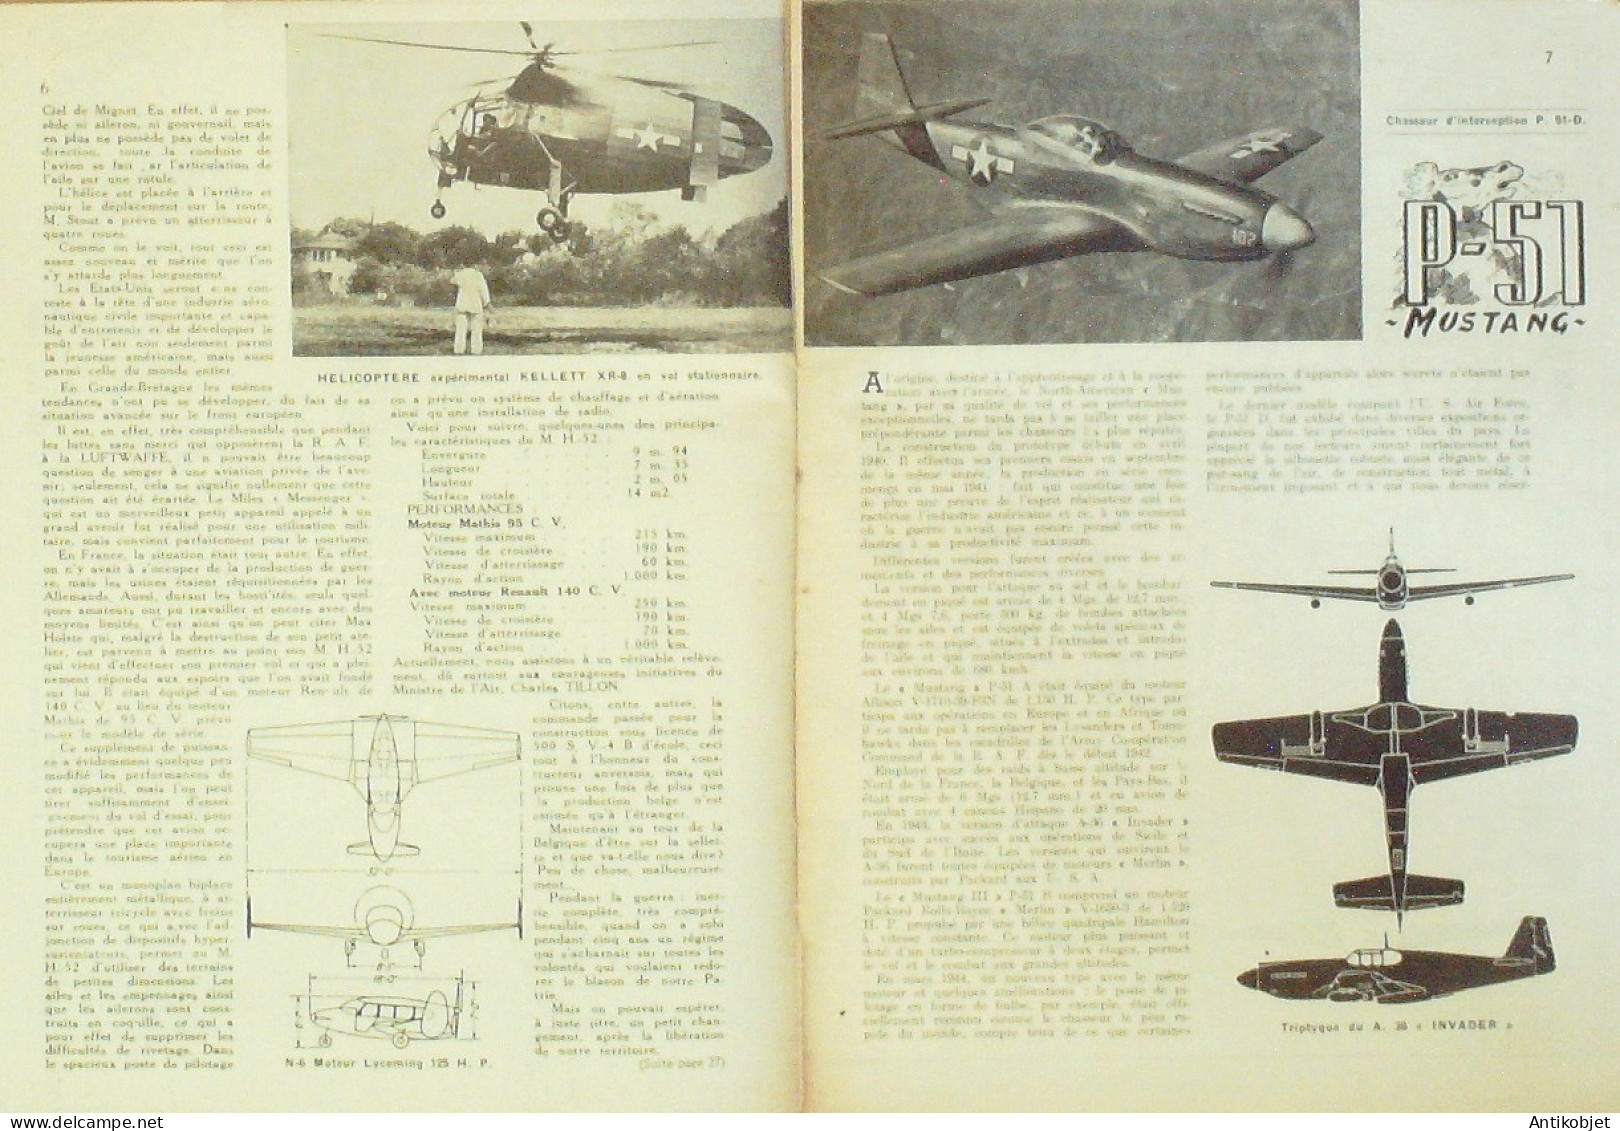 Escadrille 1945 N° 1 Lockheed Constellation Douglas C74 Gaumman F6F-3 Hellcat - Manuals